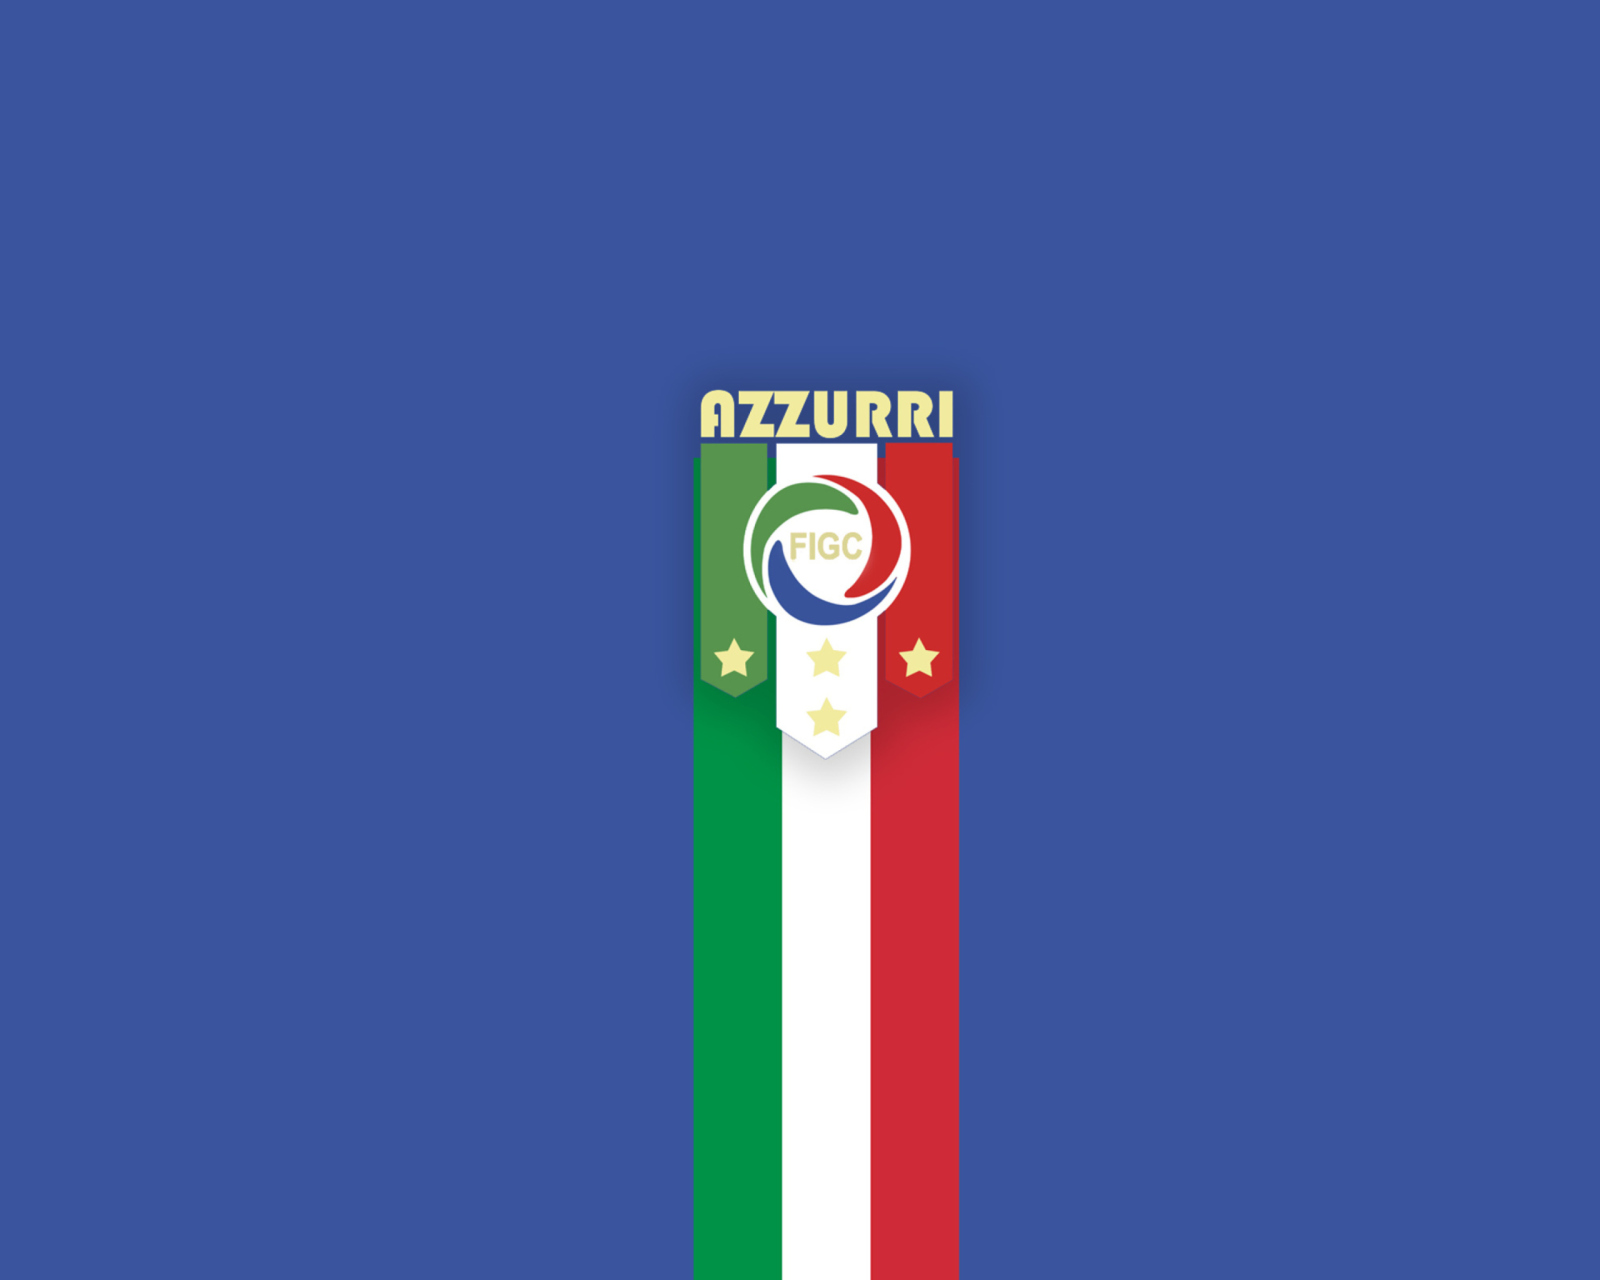 Azzurri - Italy National Team wallpaper 1600x1280